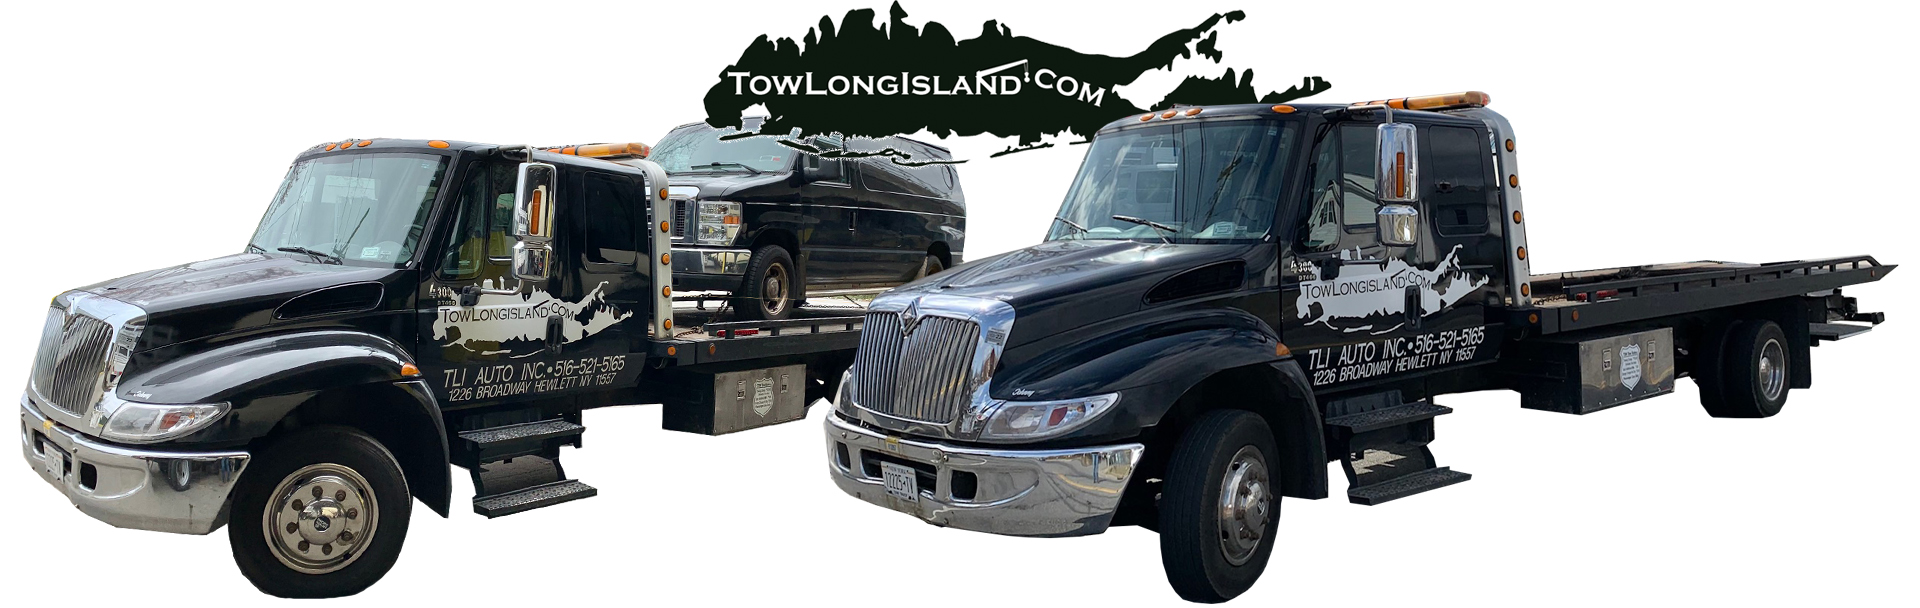 TowLongIsland.com | Tow Truck Professional Services | Roosevelt, Long Island, New York